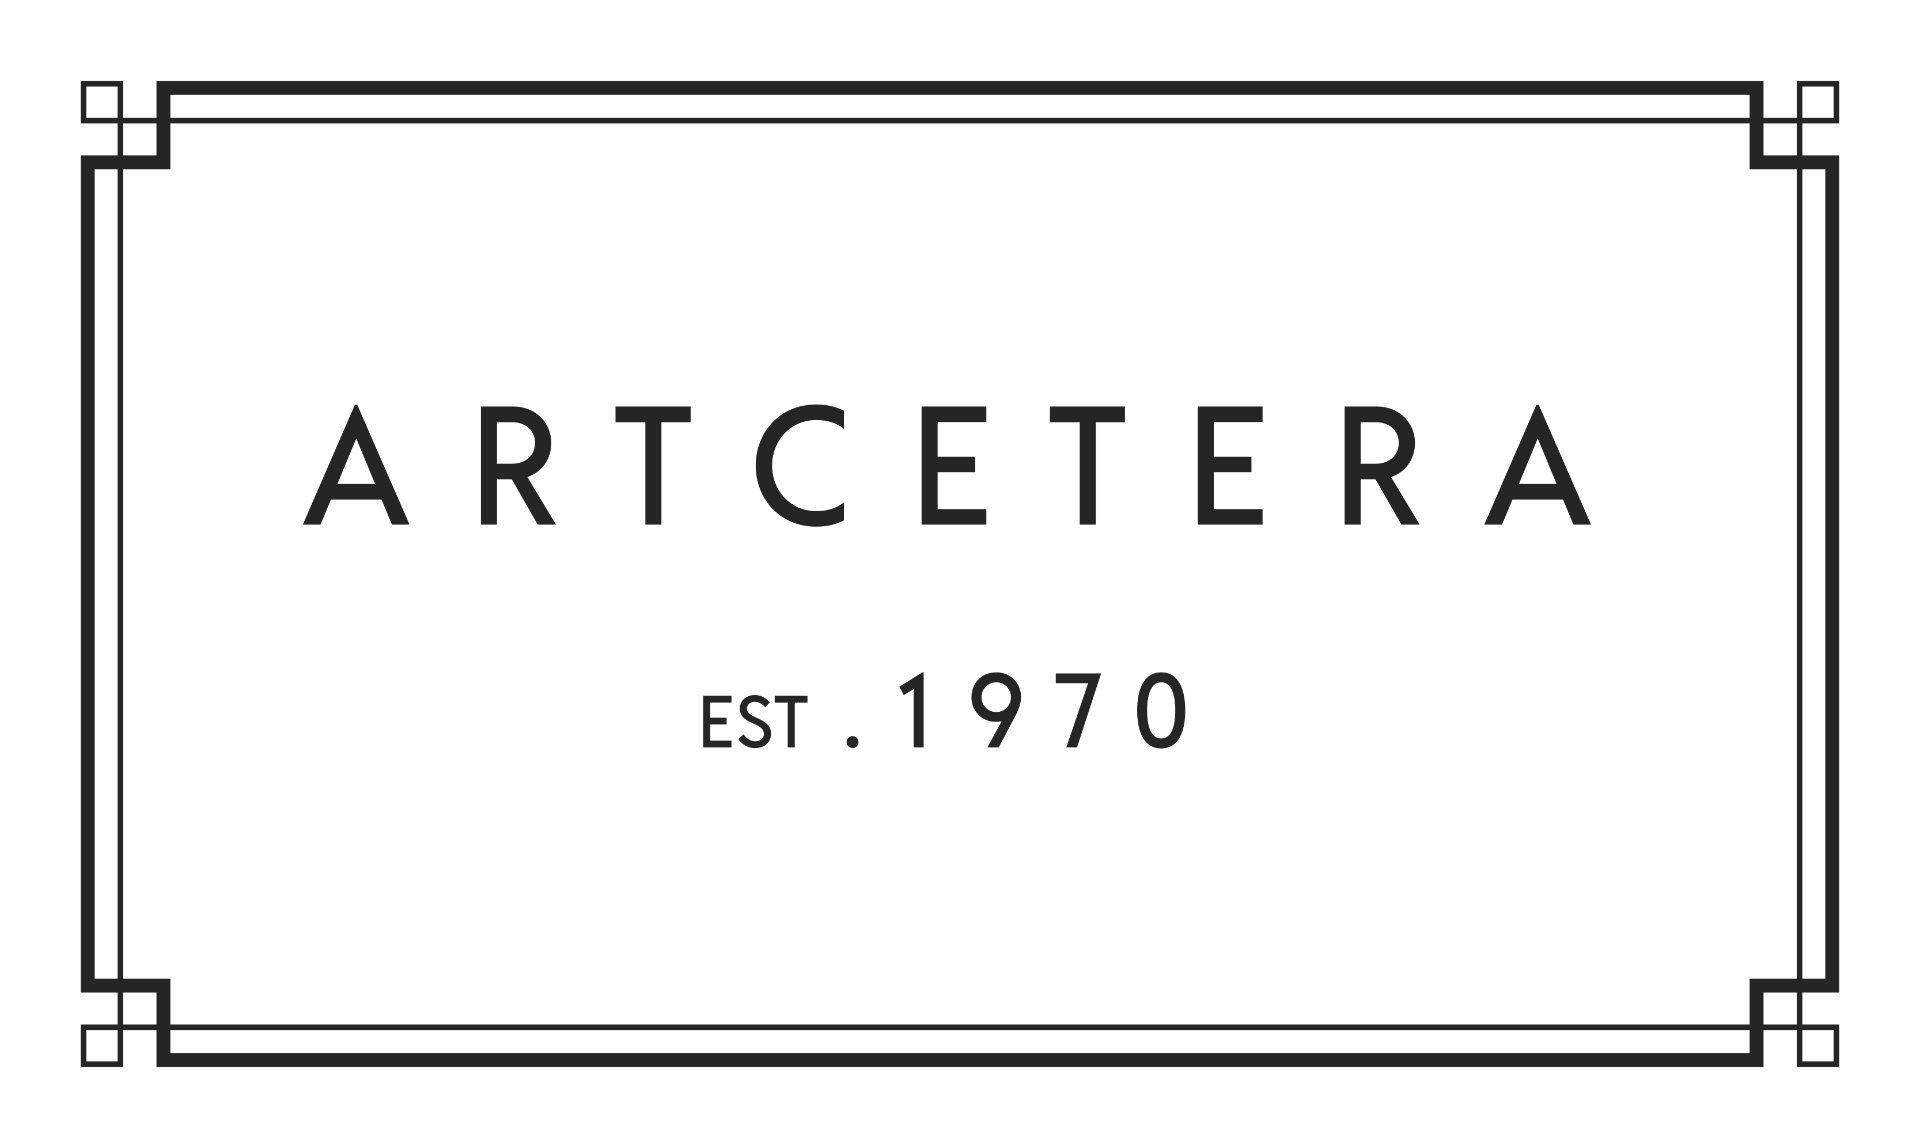 Artcetera logo